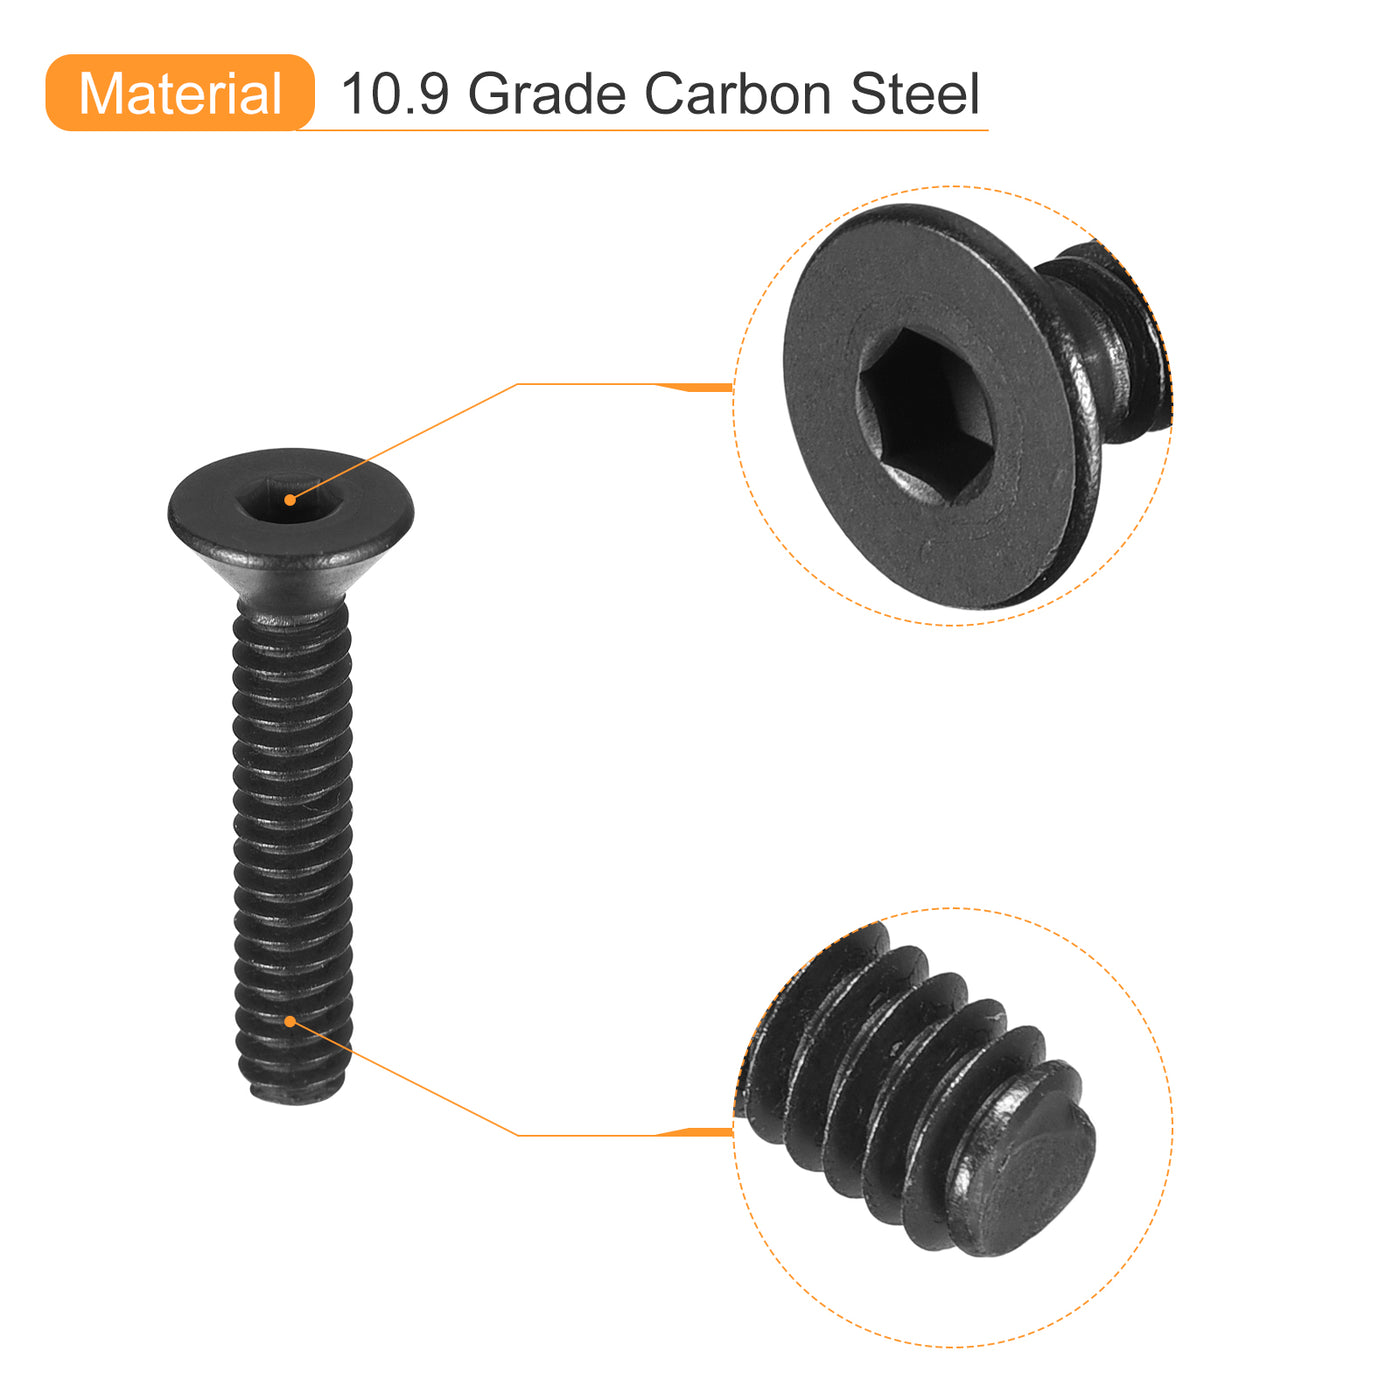 uxcell Uxcell #10-24x1" Flat Head Socket Cap Screws, 10.9 Grade Carbon Steel, 50PCS